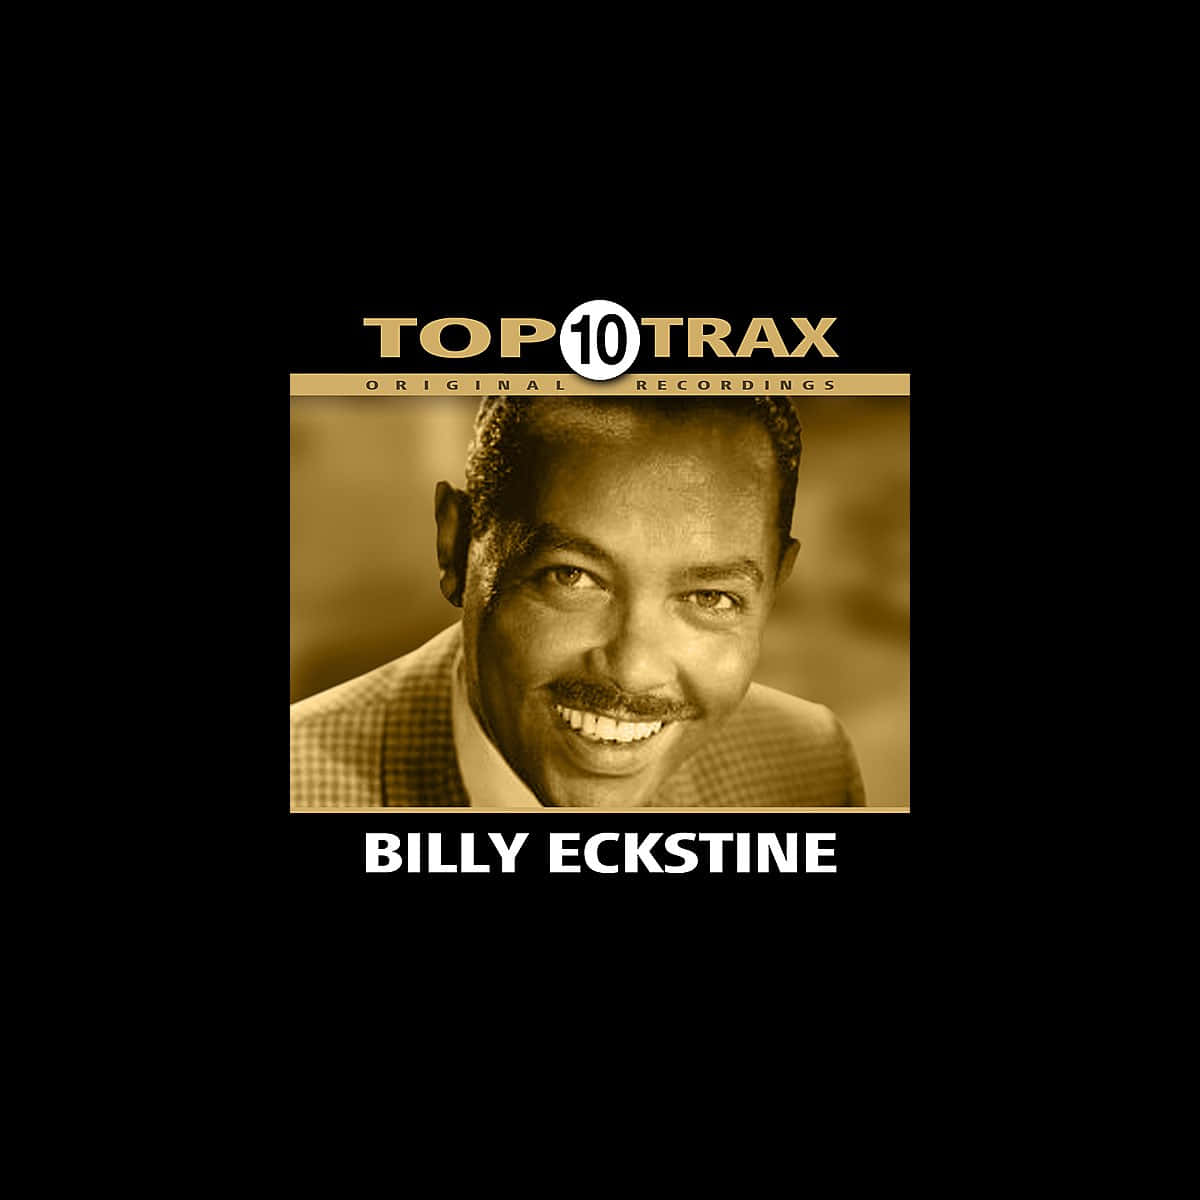 Billy Eckstine Top 10 Trax Cover Wallpaper